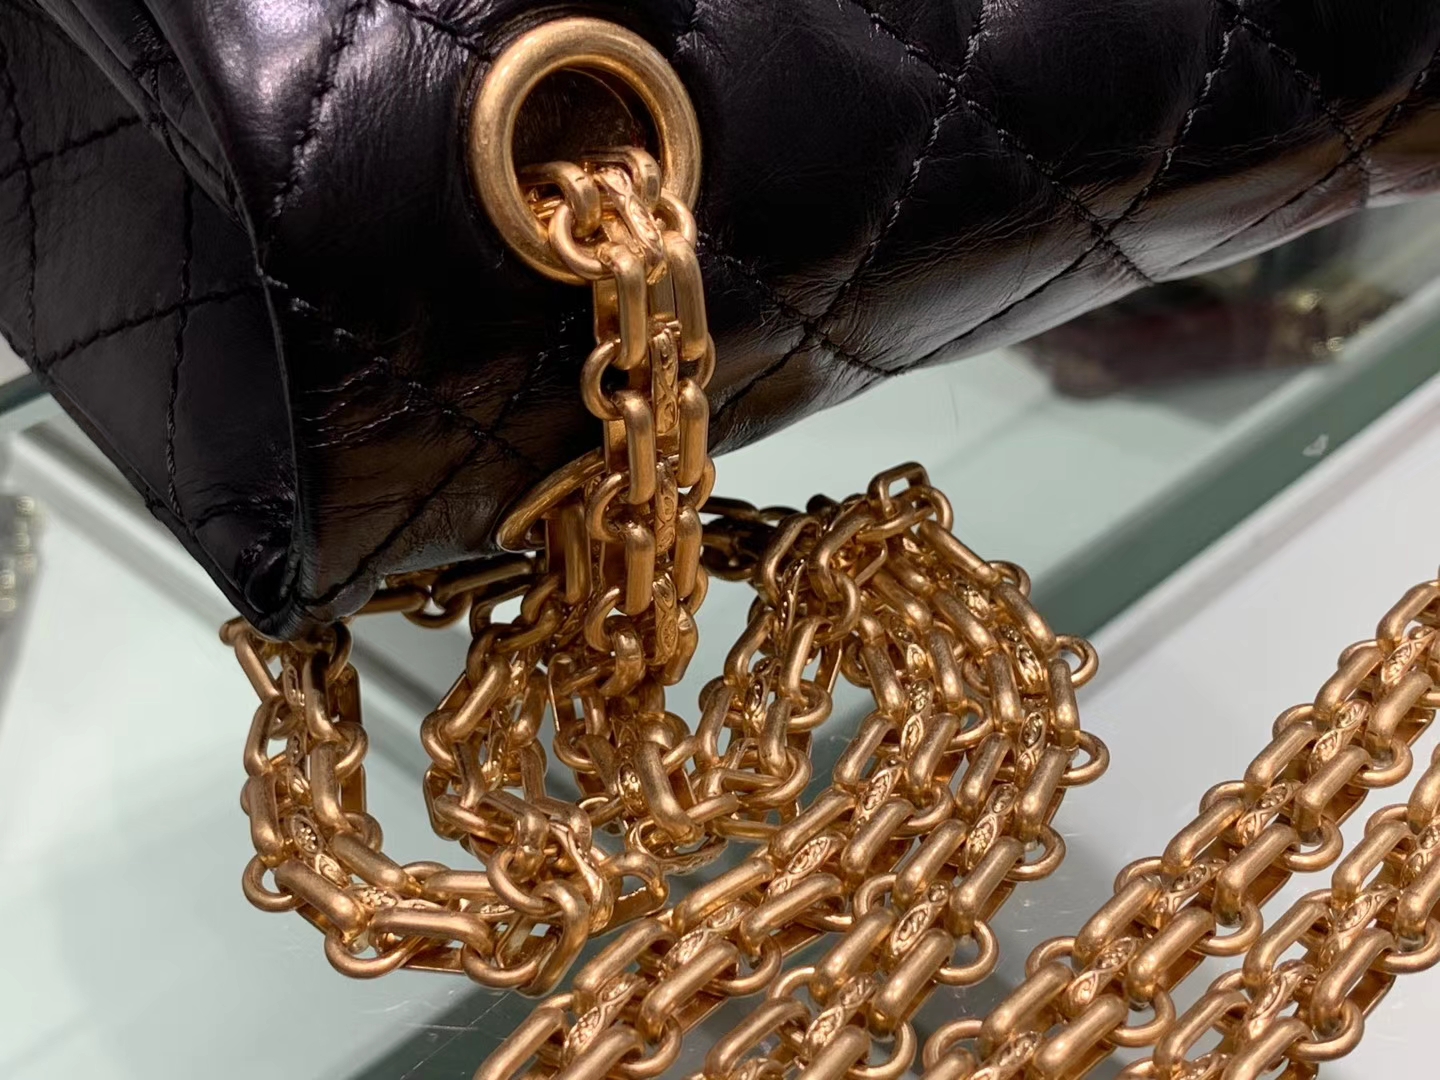 Chanel（香奈儿）reissue 链条包 2.55经典复刻系列 黑色 20cm 金扣